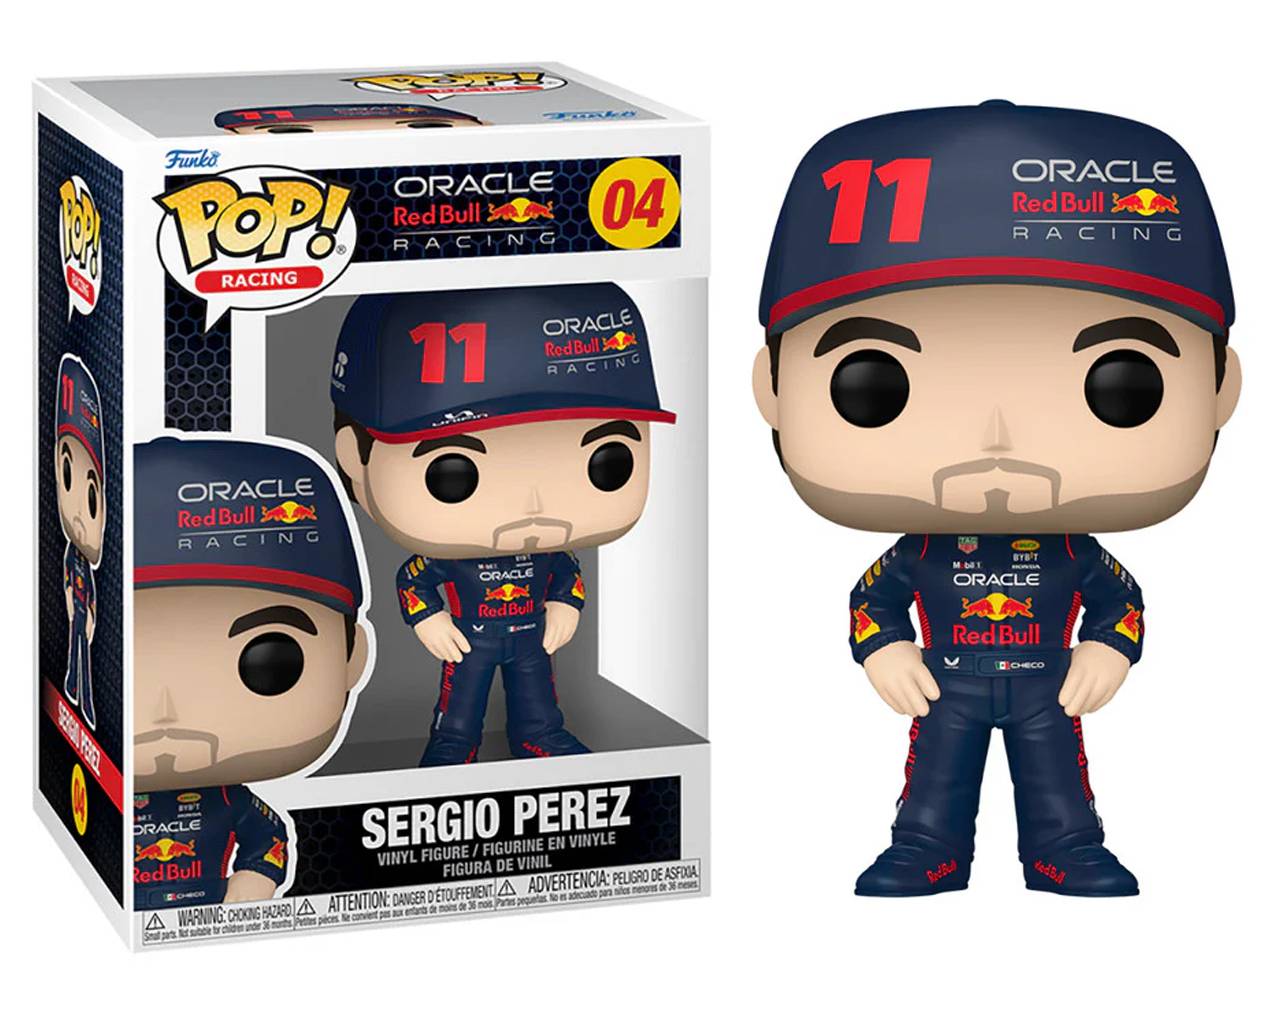 Sergio Pérez - Racing Formula 1 Pop! Vinyl